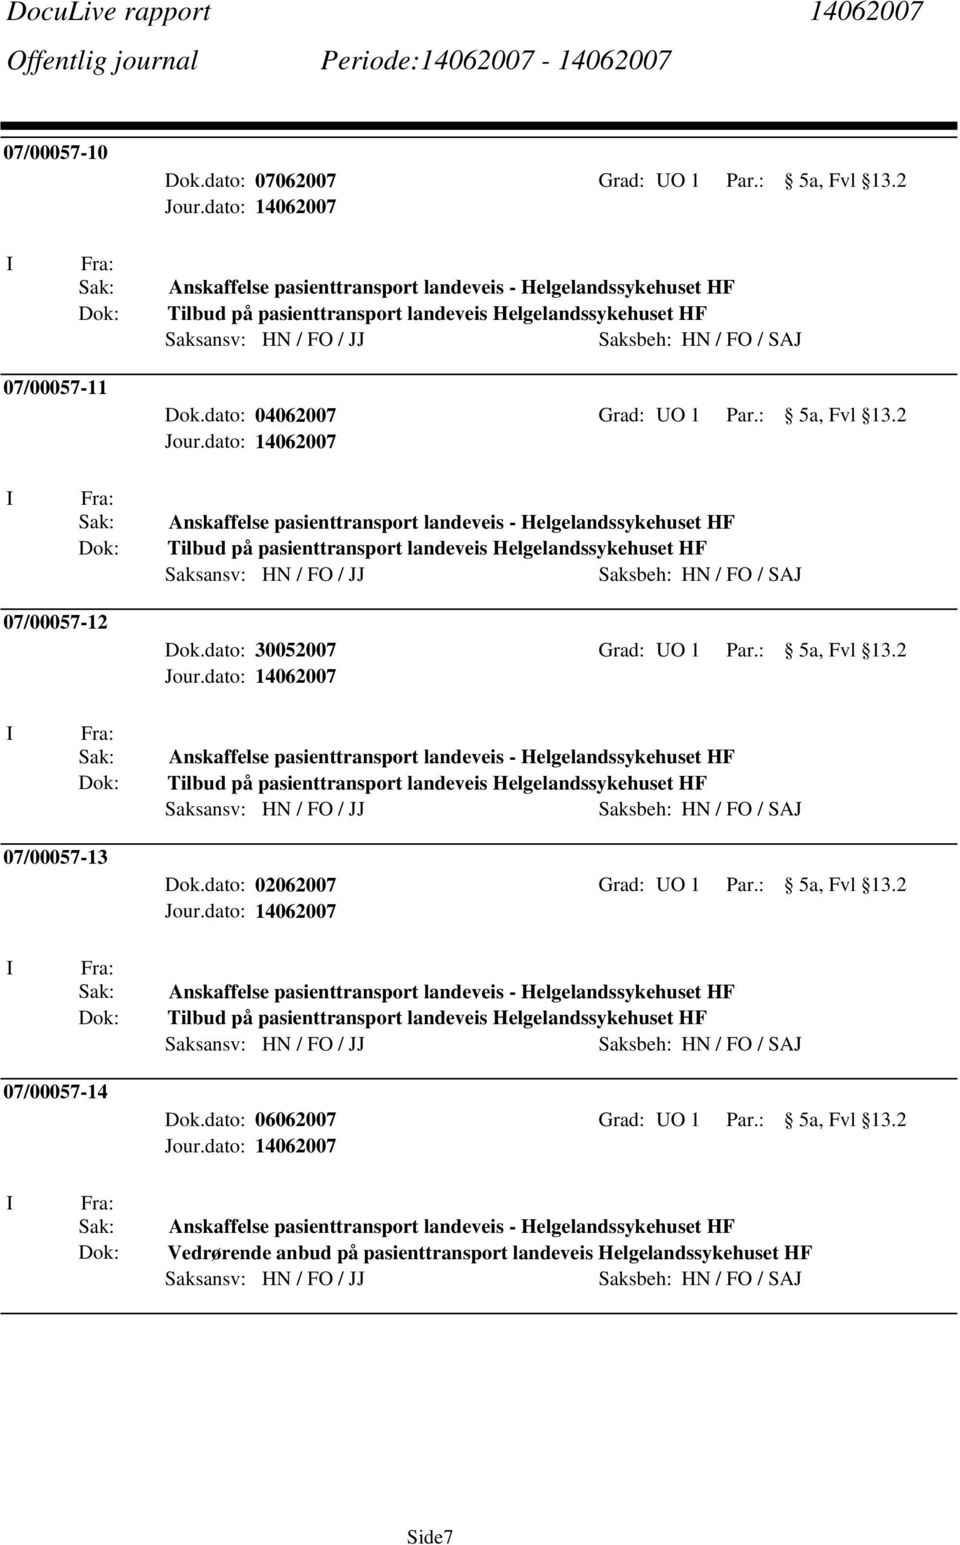 2 Tilbud på pasienttransport landeveis Helgelandssykehuset HF 07/00057-13 Dok.dato: 02062007 Grad: UO 1 Par.: 5a, Fvl 13.